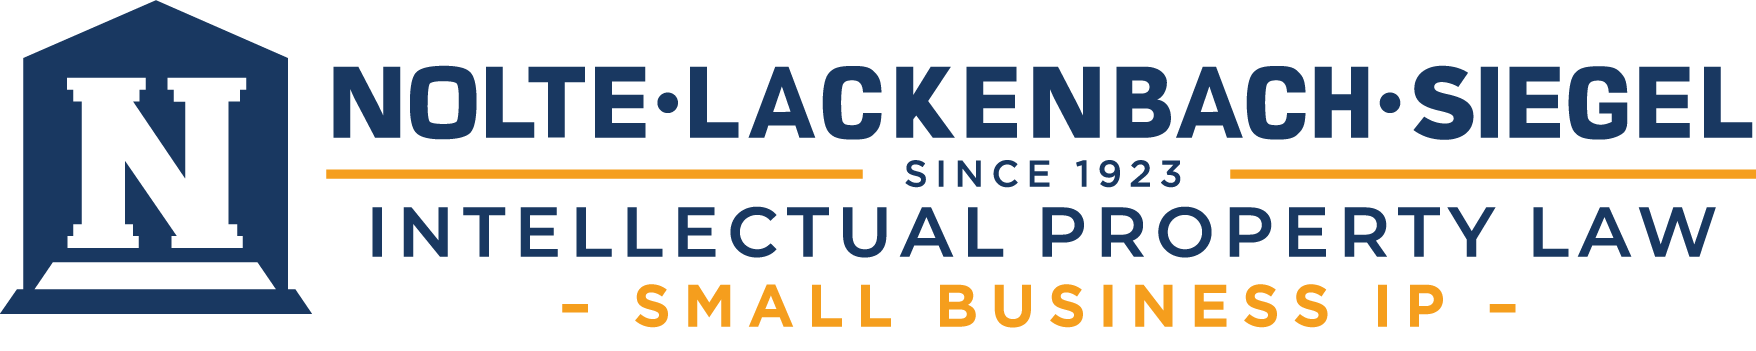 NLS Small Business IP logo